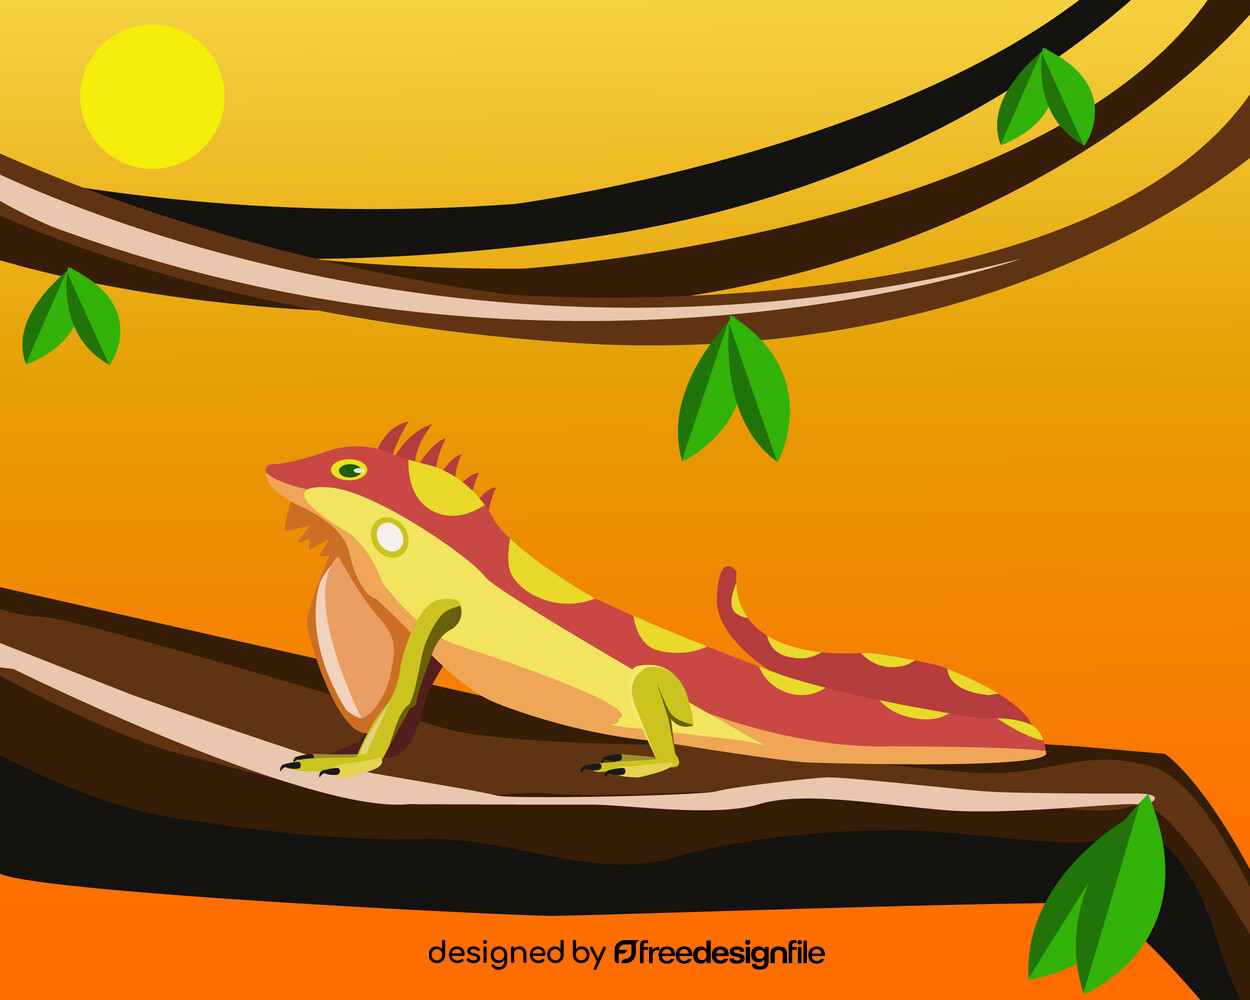 Lizard reptile vector image